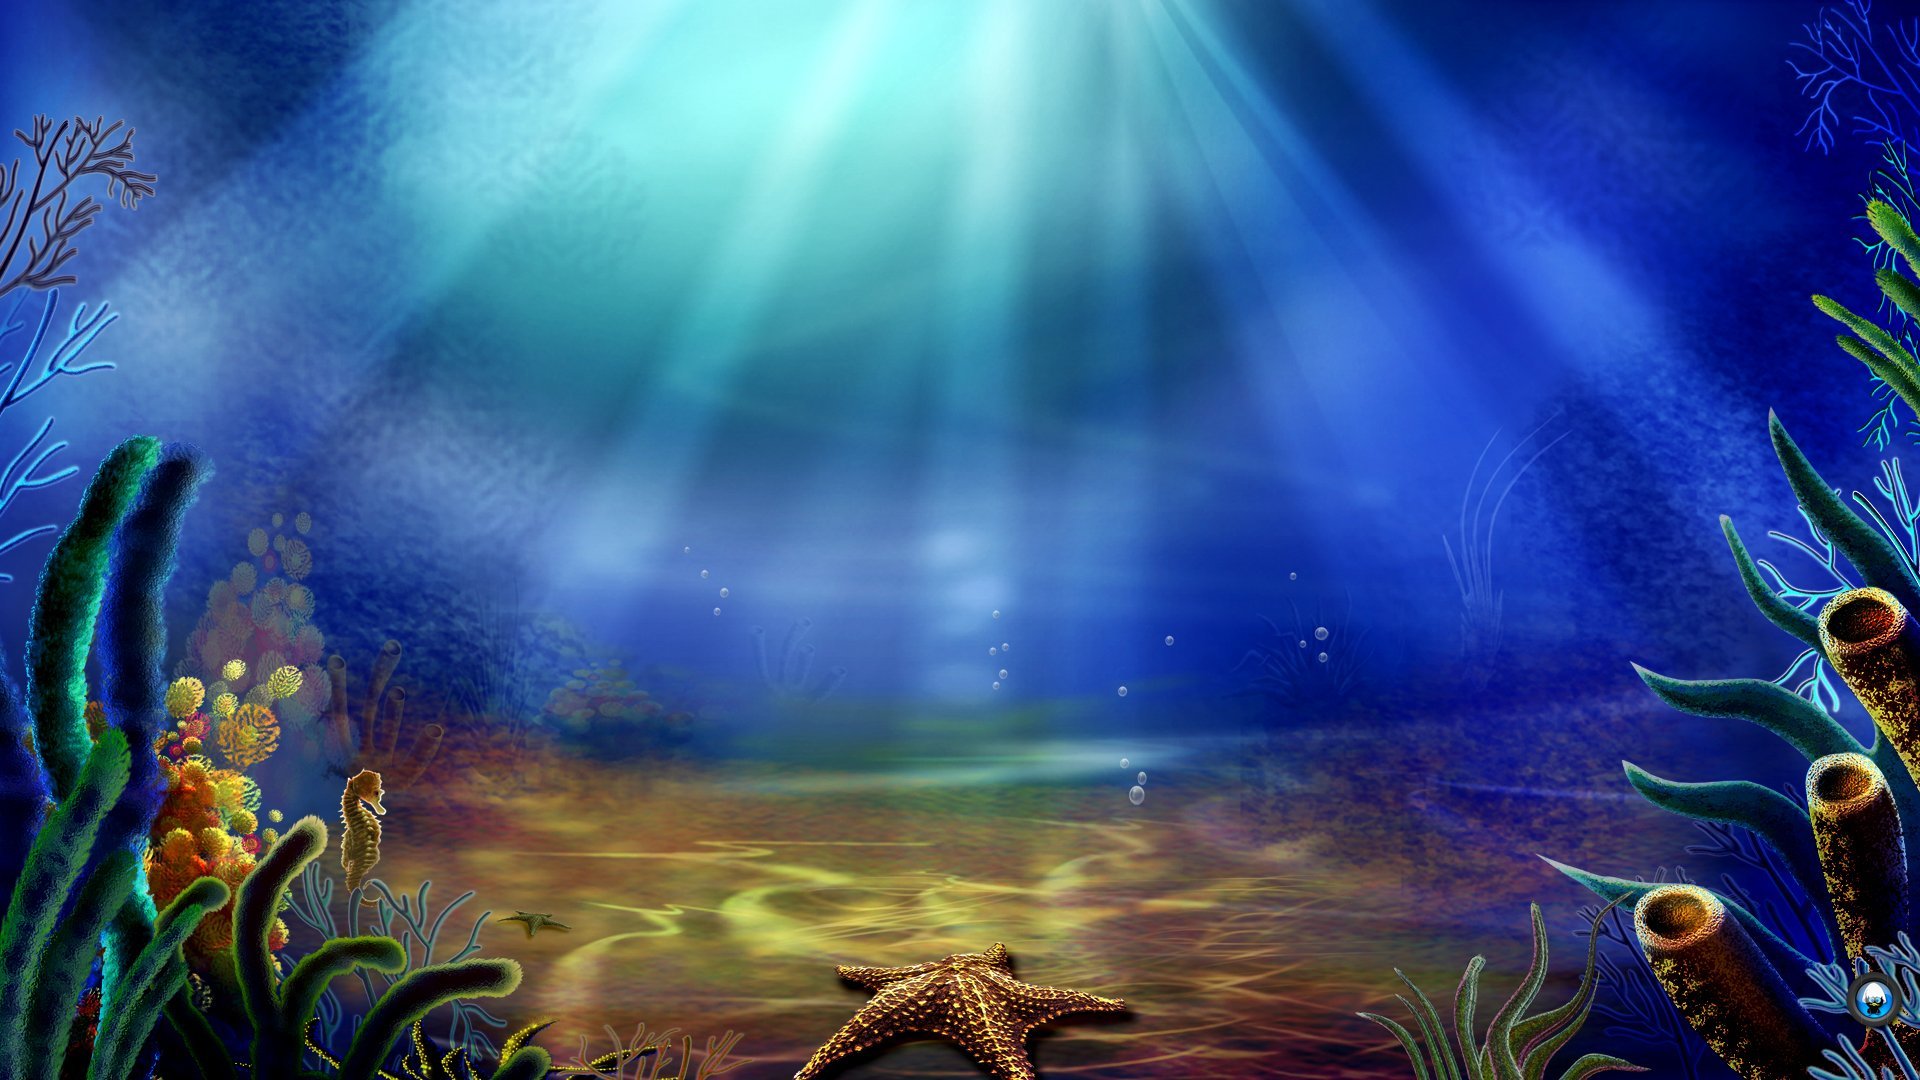 Underwater Wallpaper&Sea World Lock Screen Image.s by Milojkovic Marija